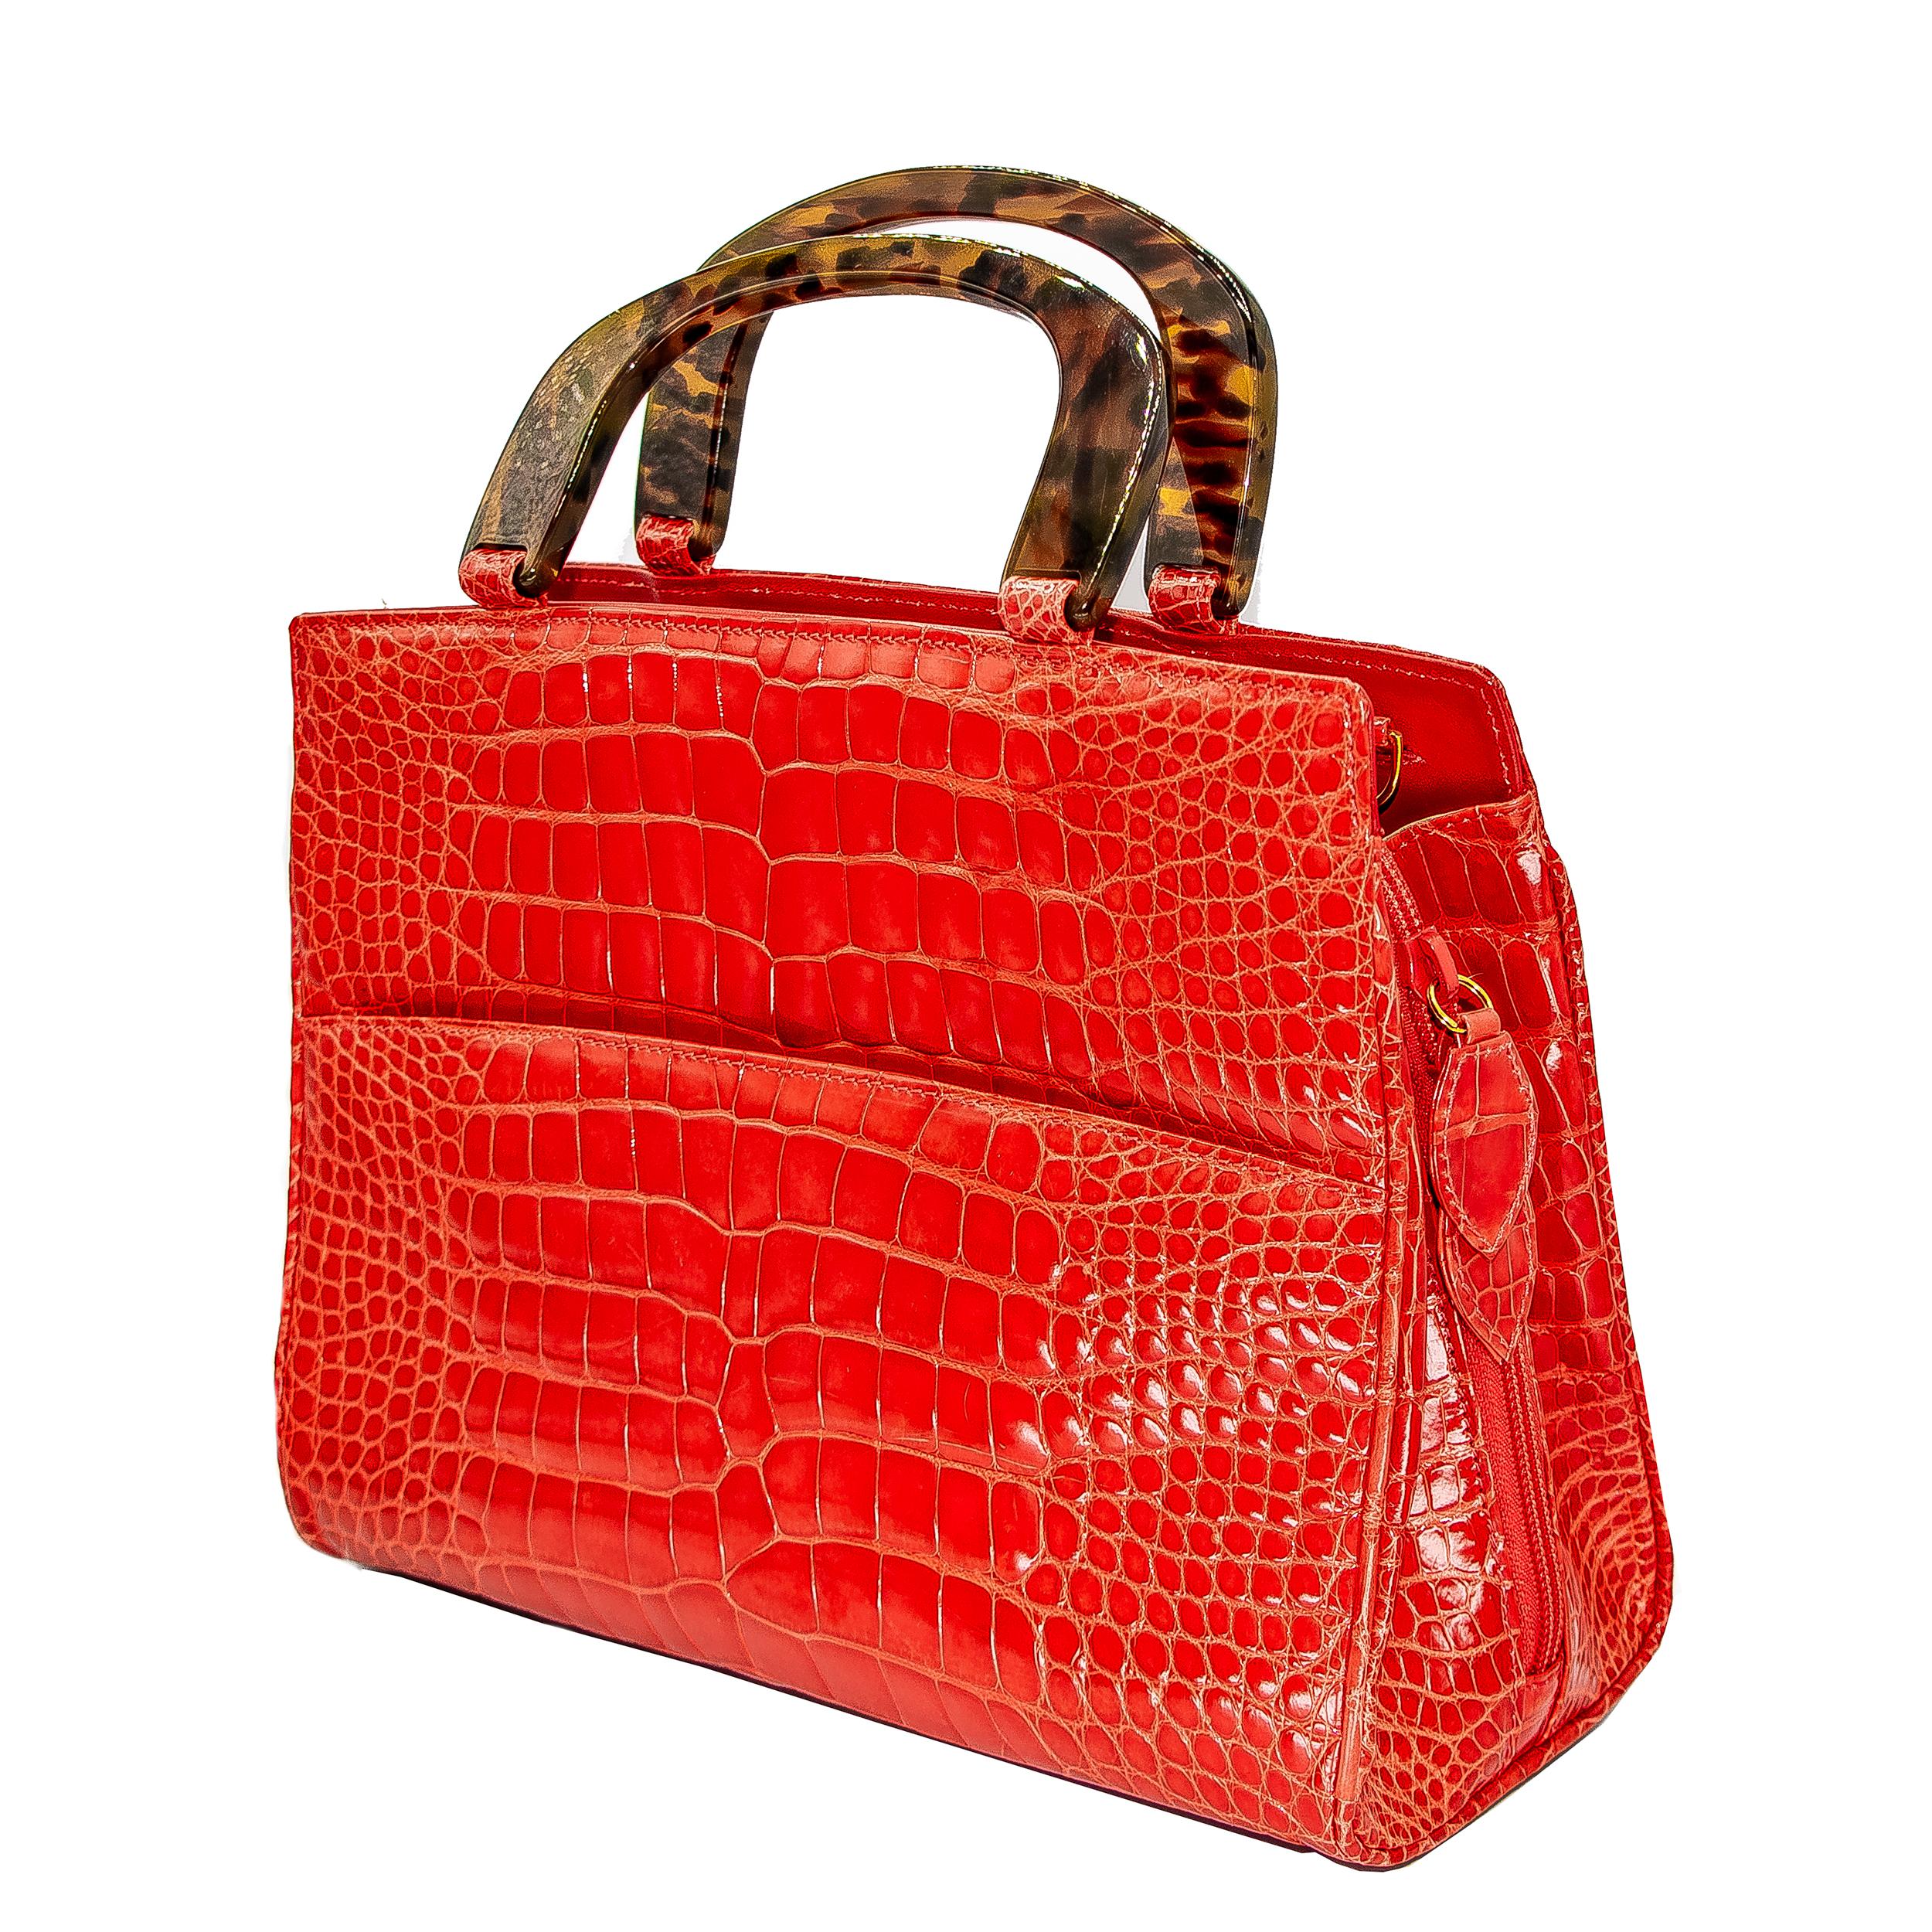 Lana Marks Fire Engine Red Alligator Handbag 3